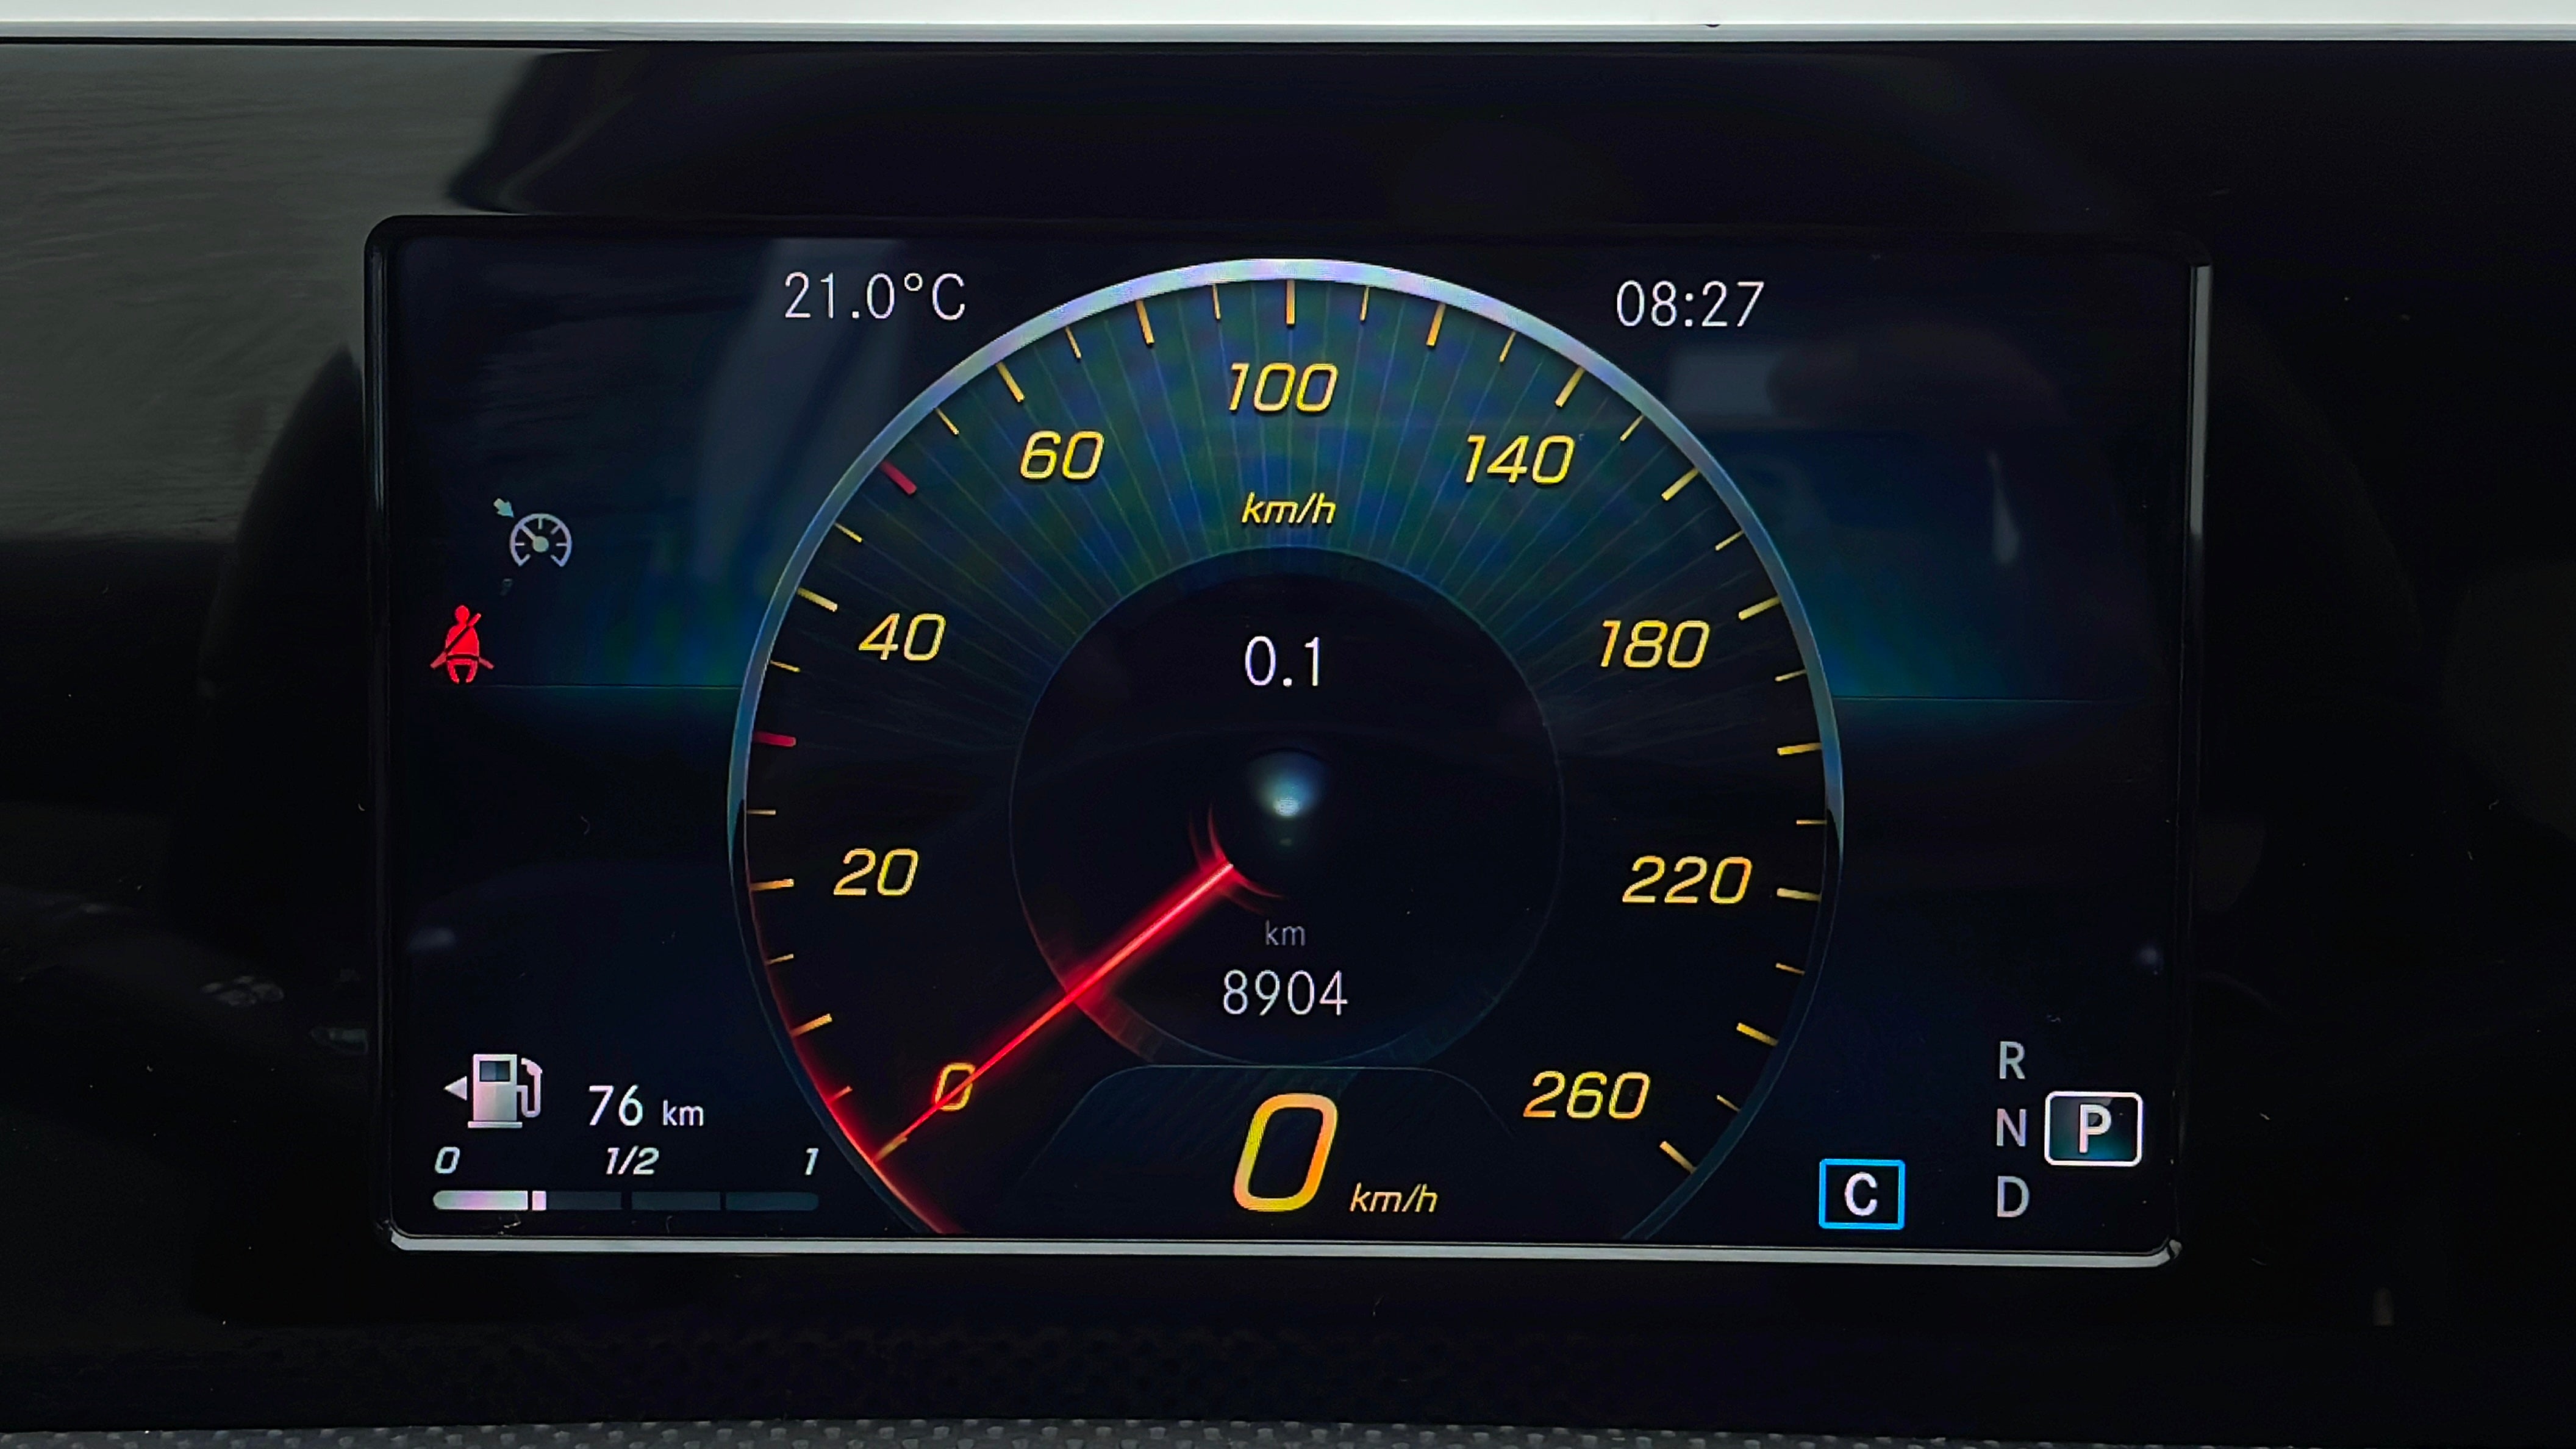 Mercedes Benz A-Class-Odometer View